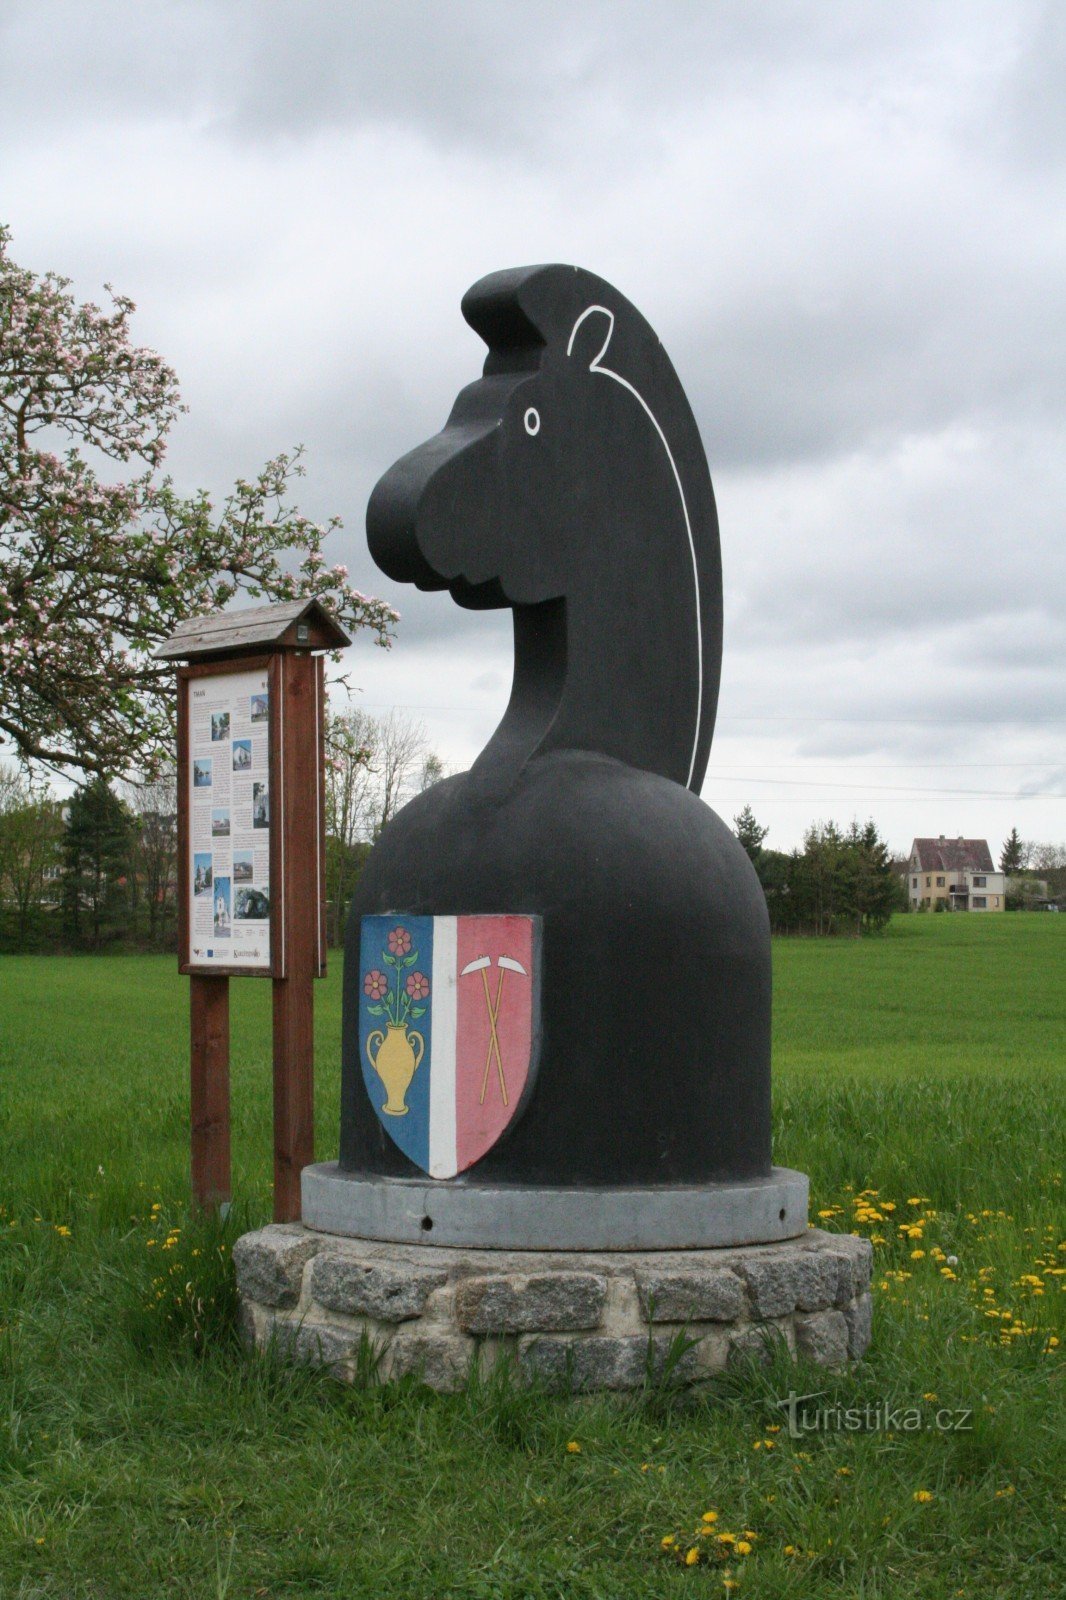 Cờ vua Karlštejnské - Ngựa đen Tmaň